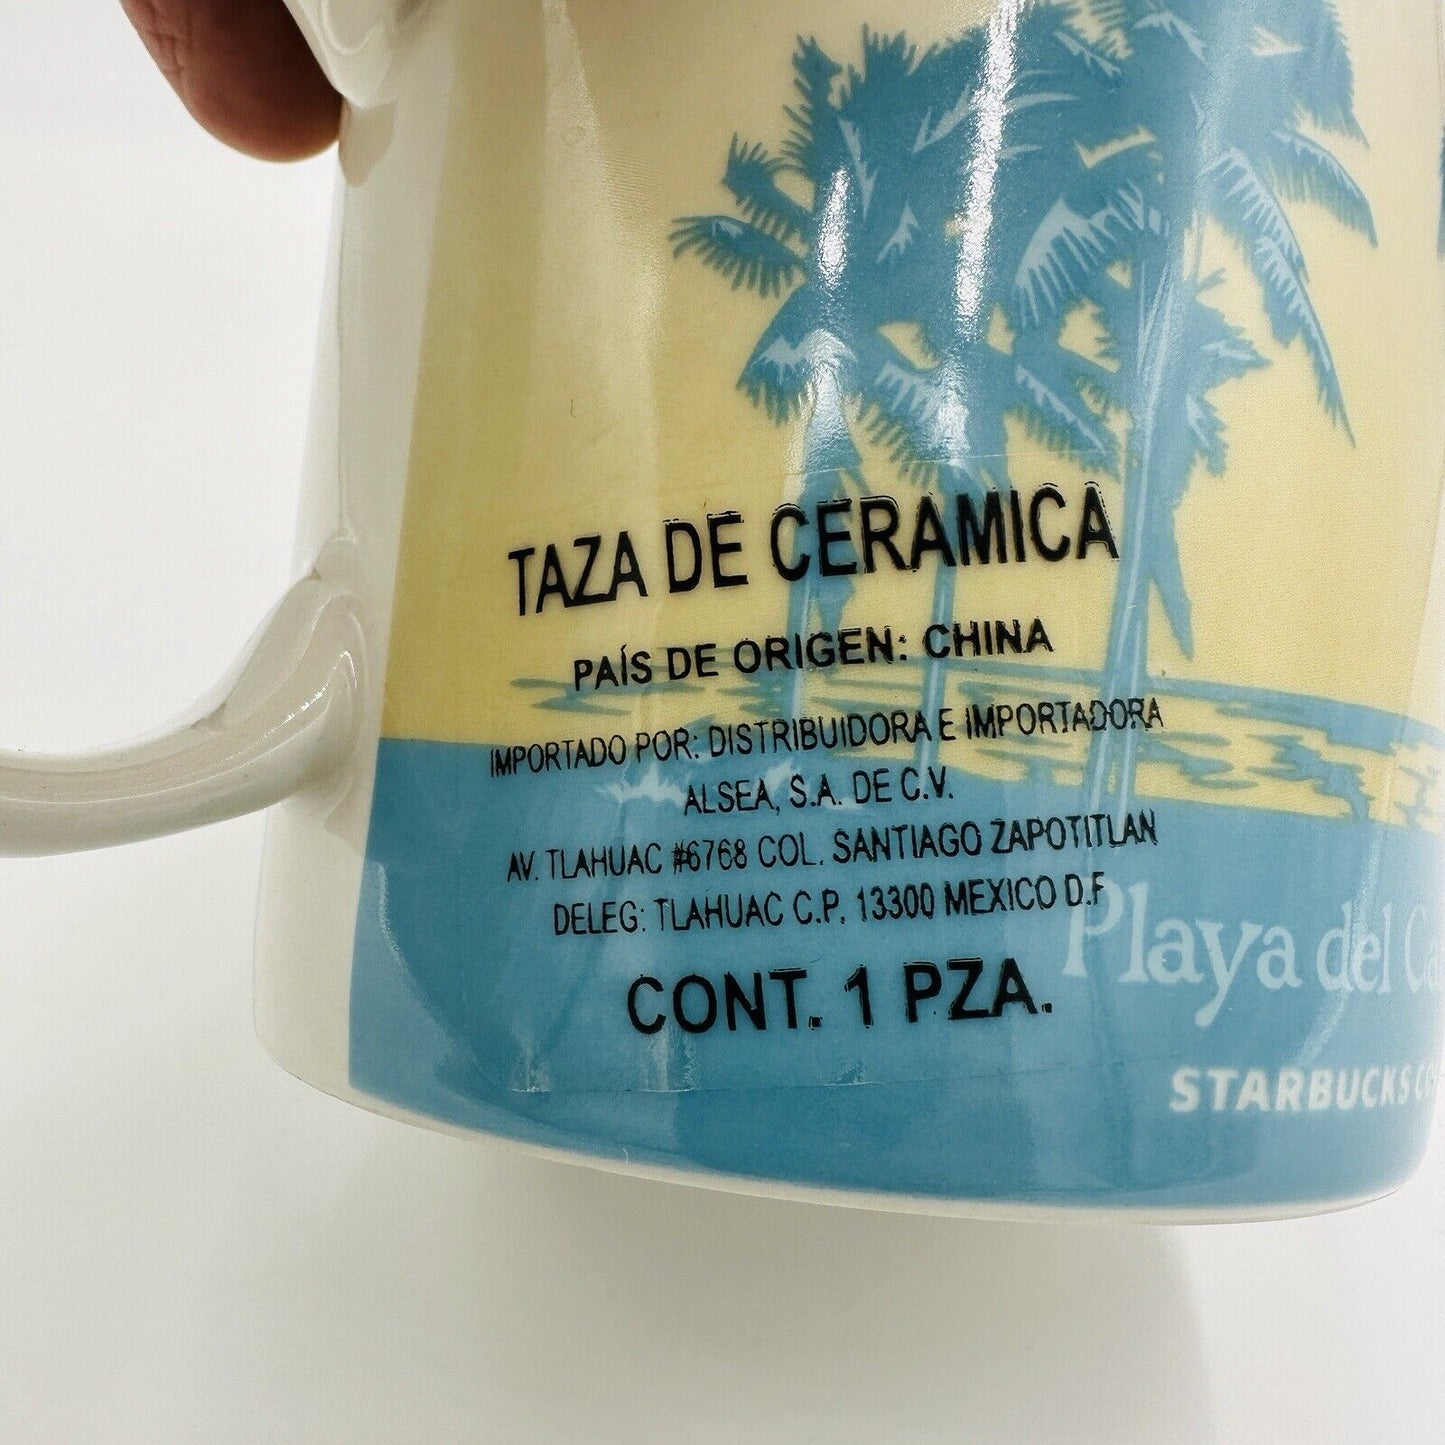 Starbucks Coffee Icon Series Playa Del Carmen 16oz Mug 2014 Mexico Collectible